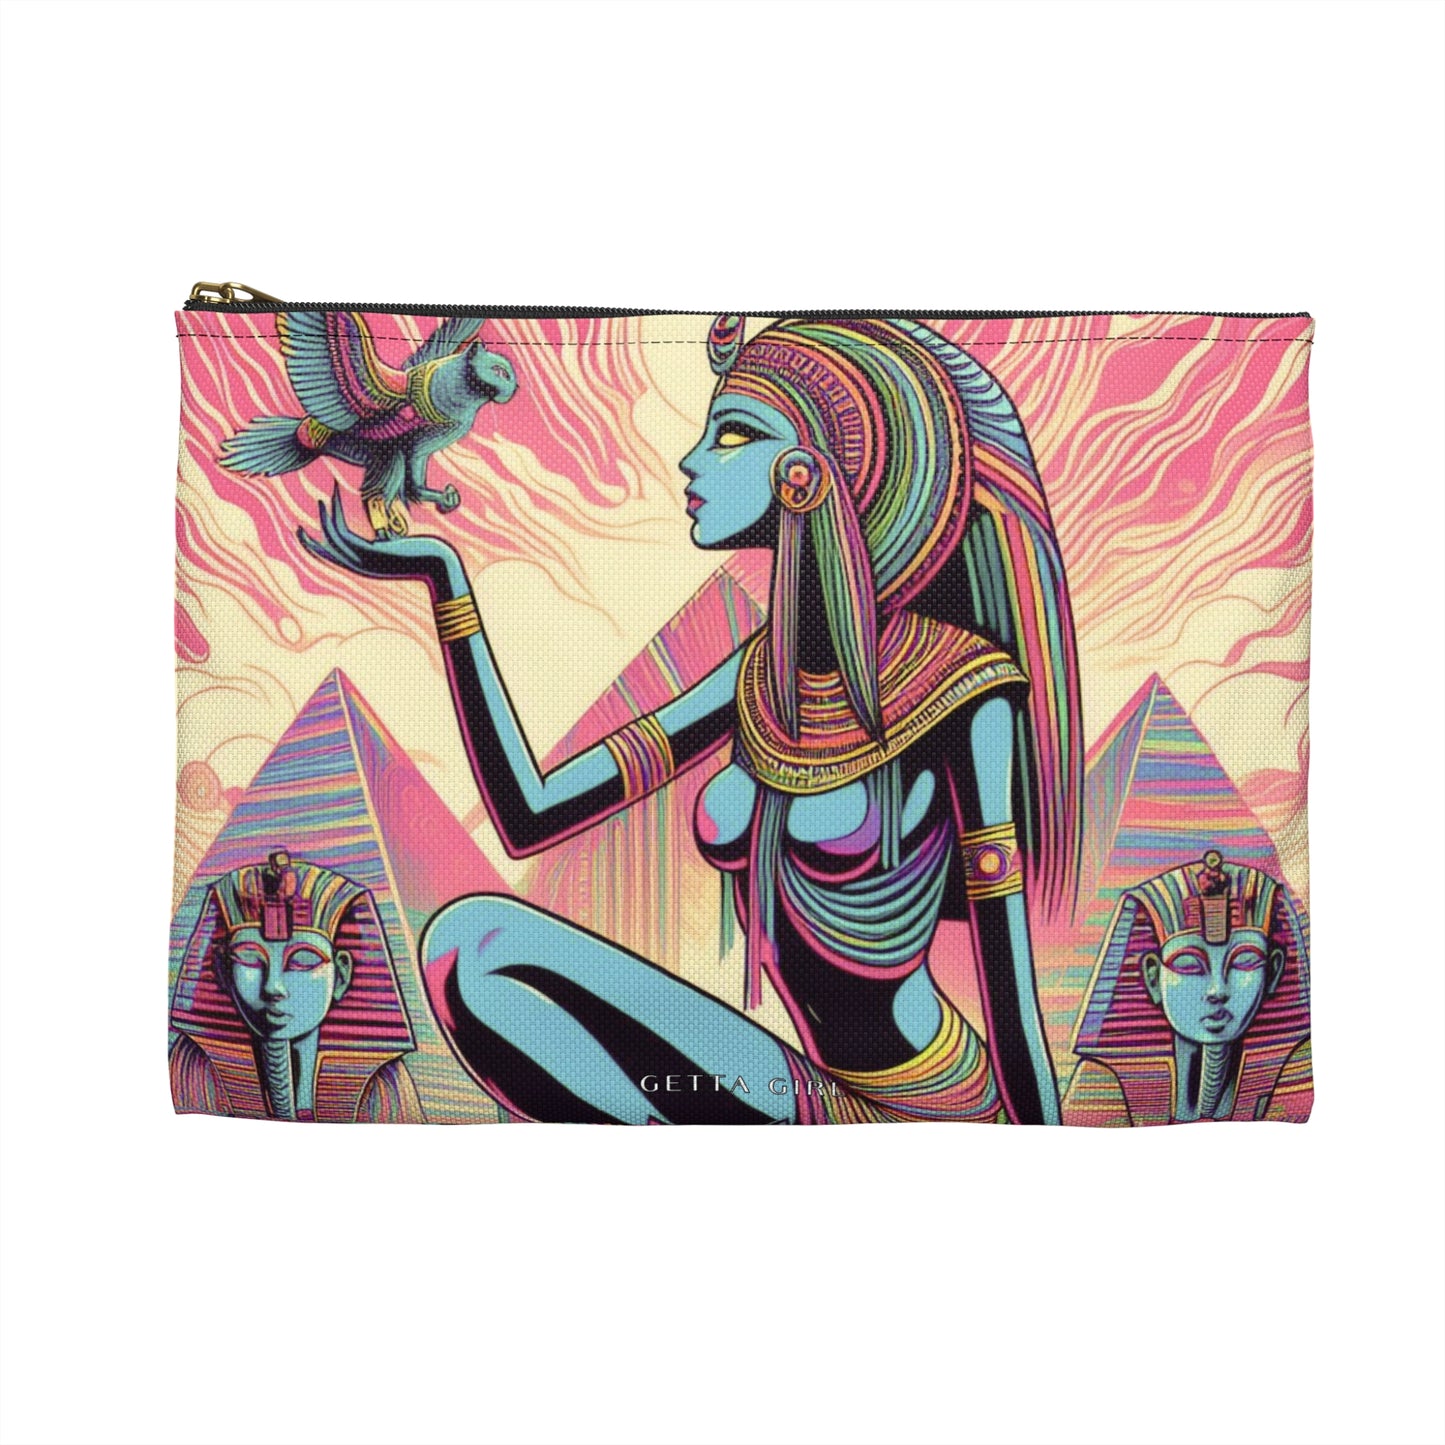 Egyptian Goddess Accessory Pouch: Everyday Bag, On-the-go Items